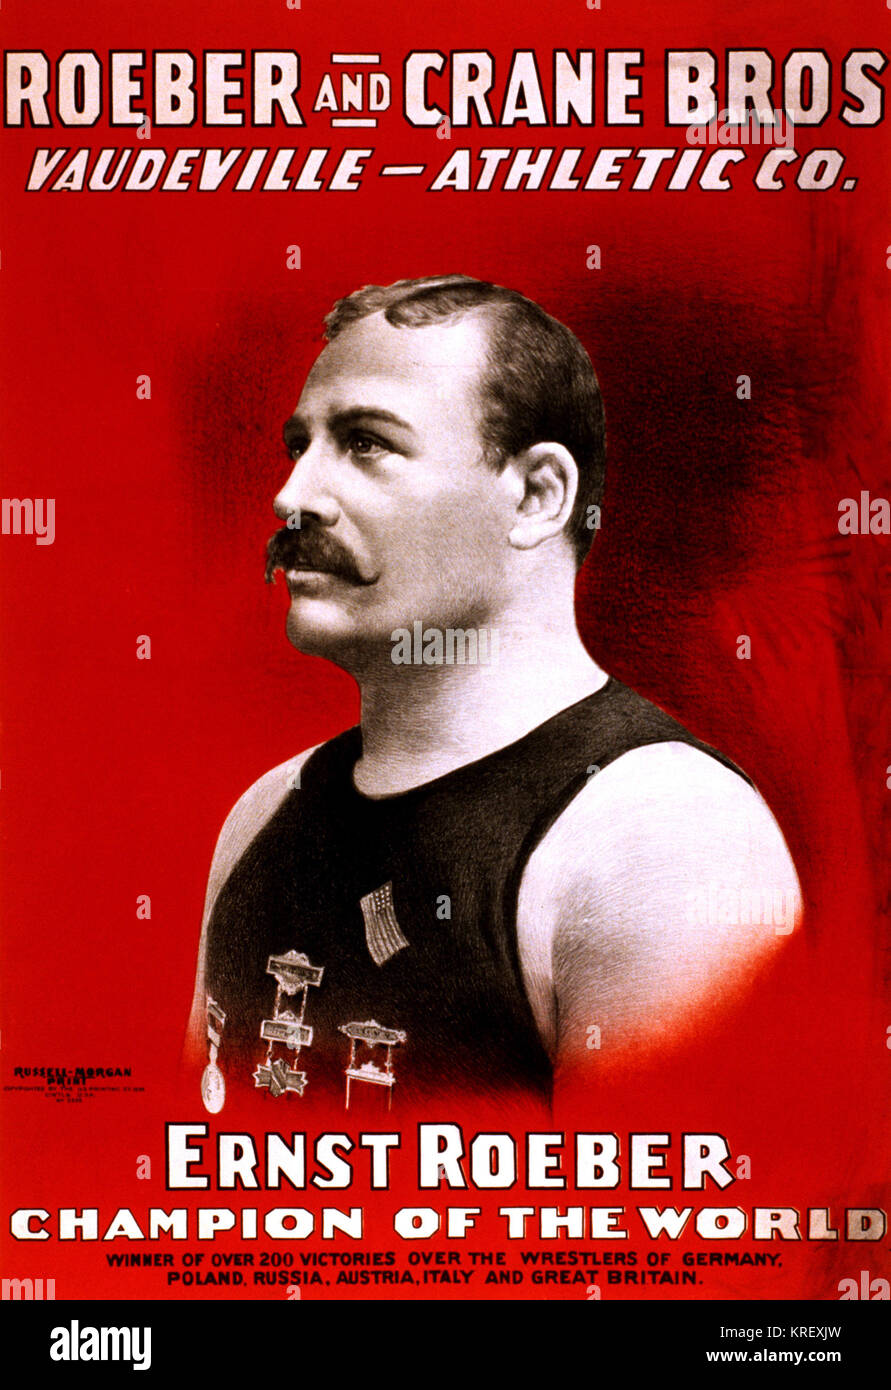 Roebers und Kran Bros Vaudeville Athletic Co.: Ernst Roebers, Meister der Welt, wrestling Poster Stockfoto